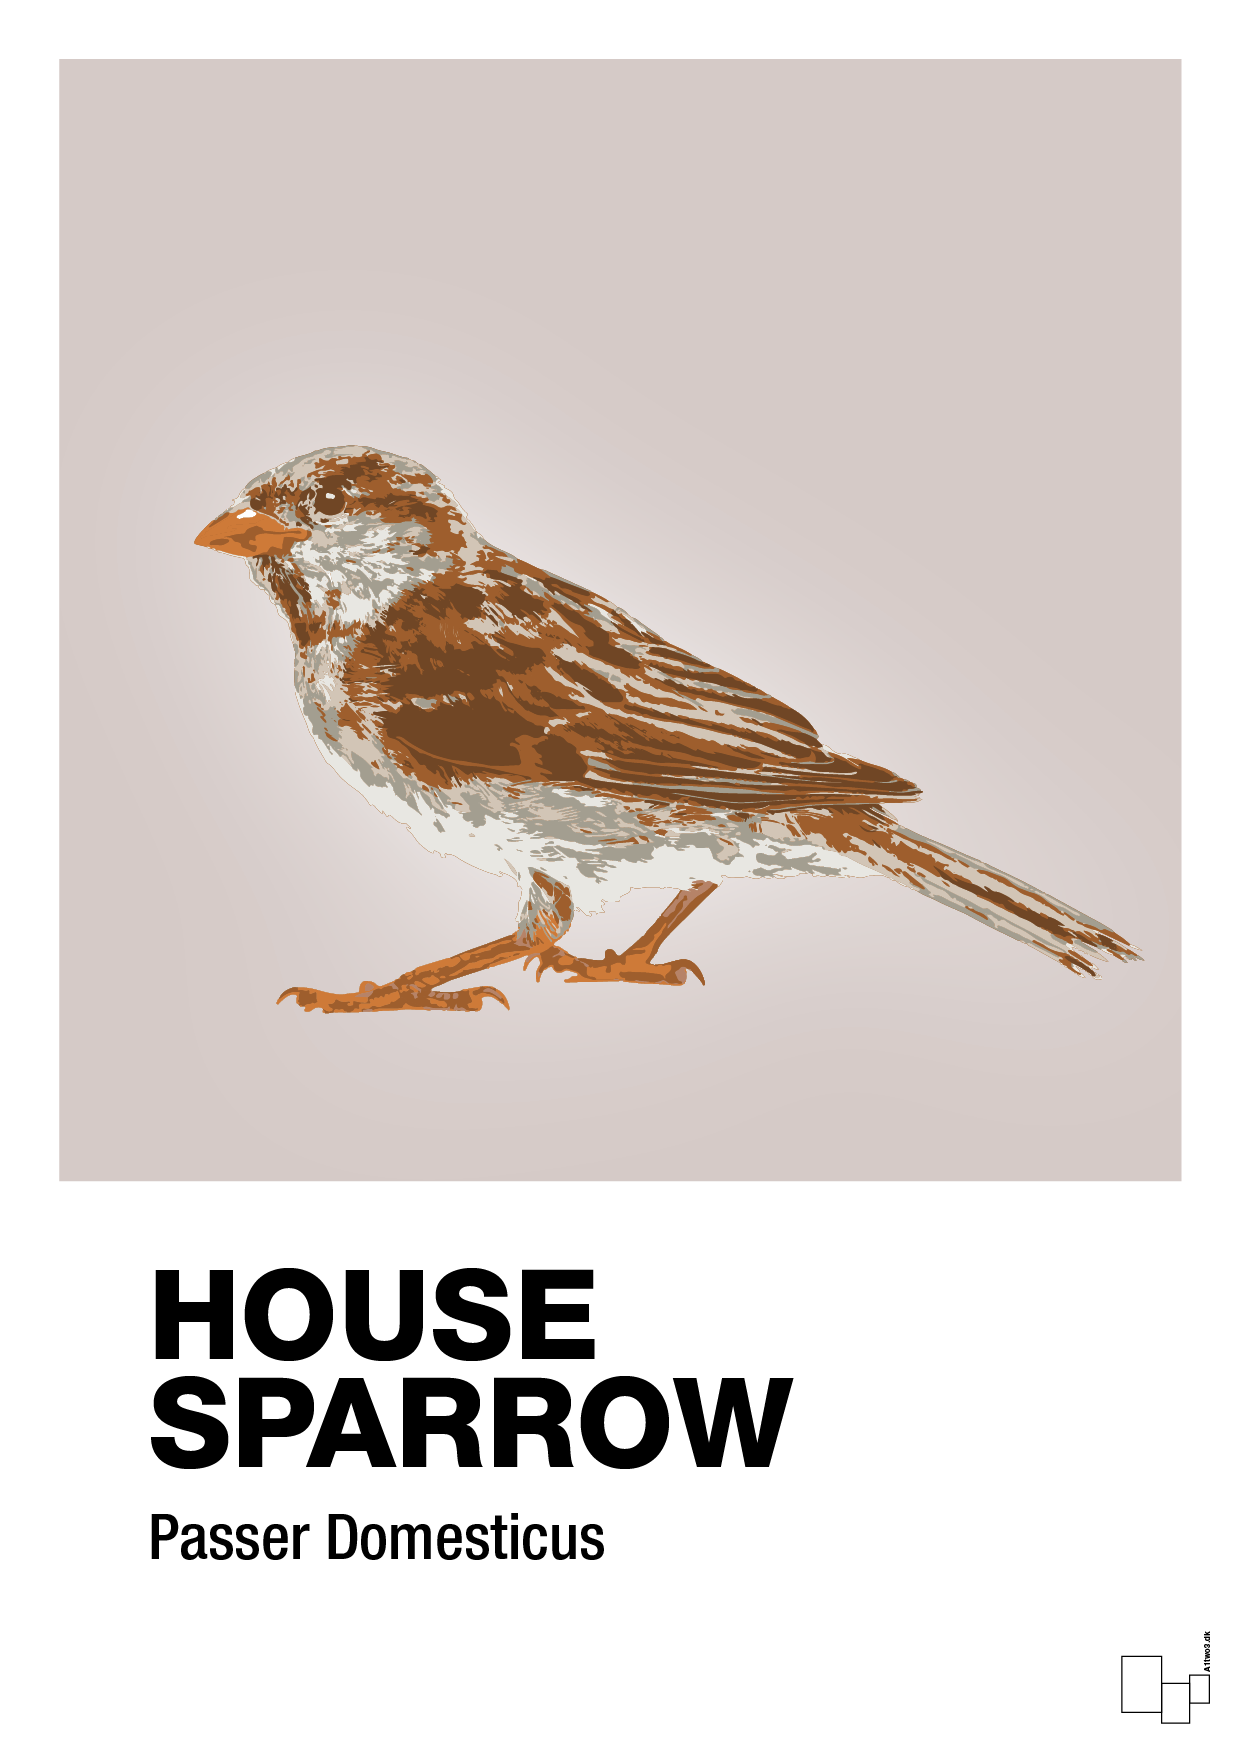 house sparrow - Plakat med Videnskab i Broken Beige